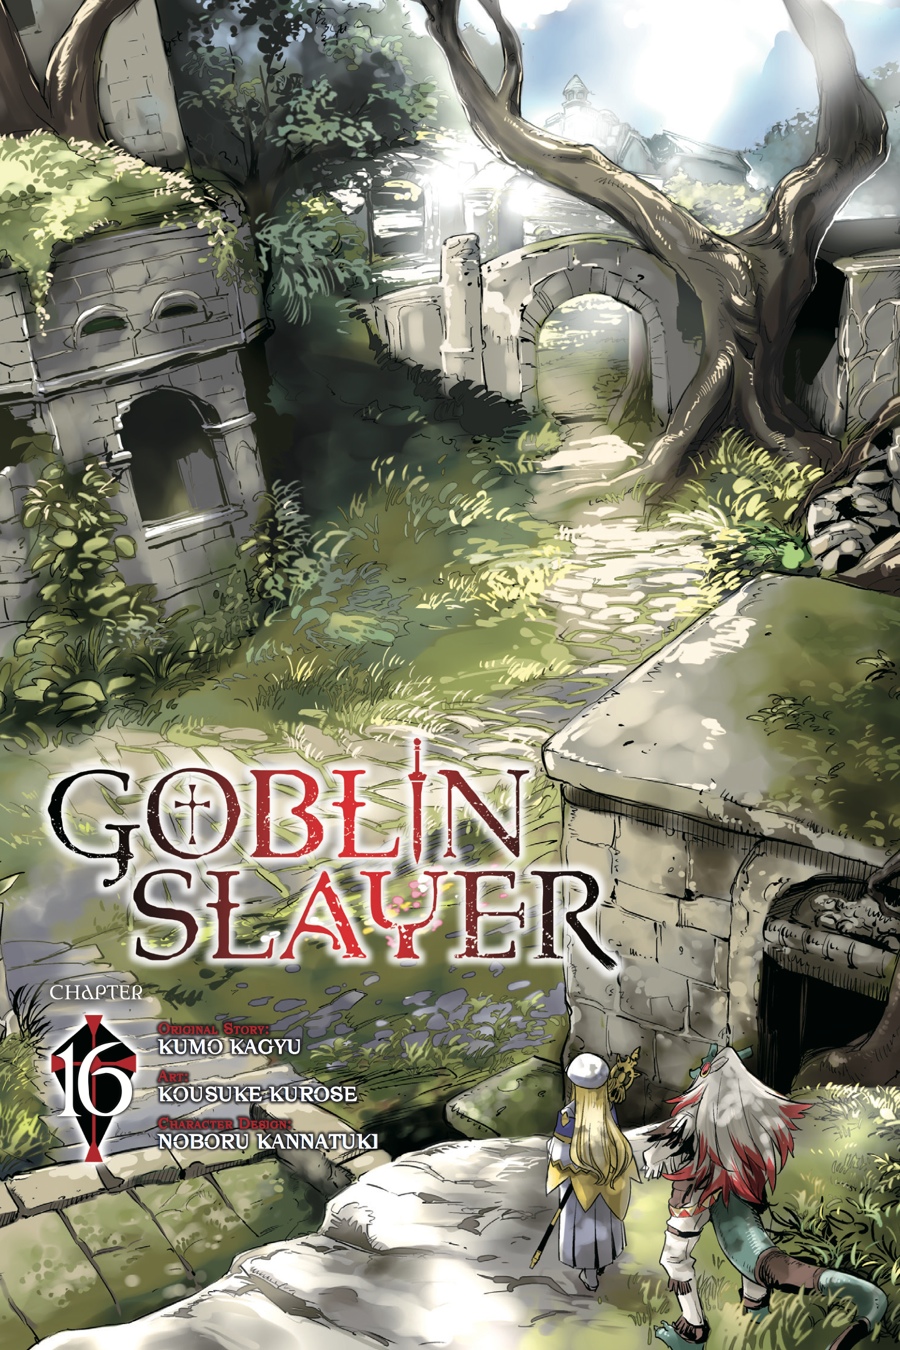 Manga Volume 2, Goblin Slayer Wiki